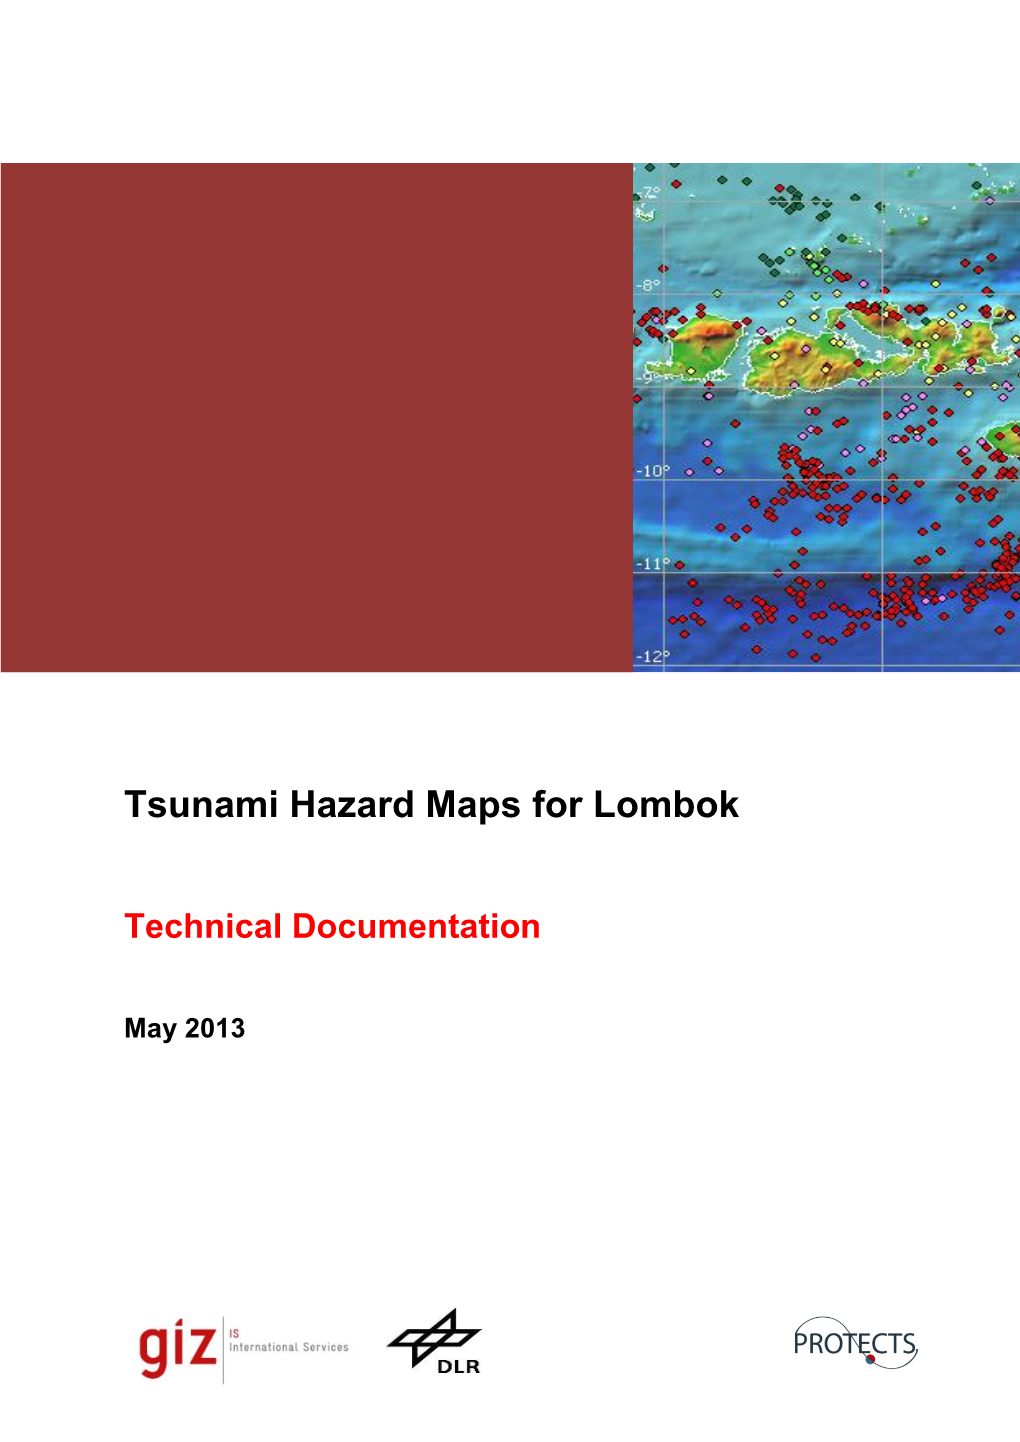 Tsunami Hazard Maps for Lombok Technical Documentation